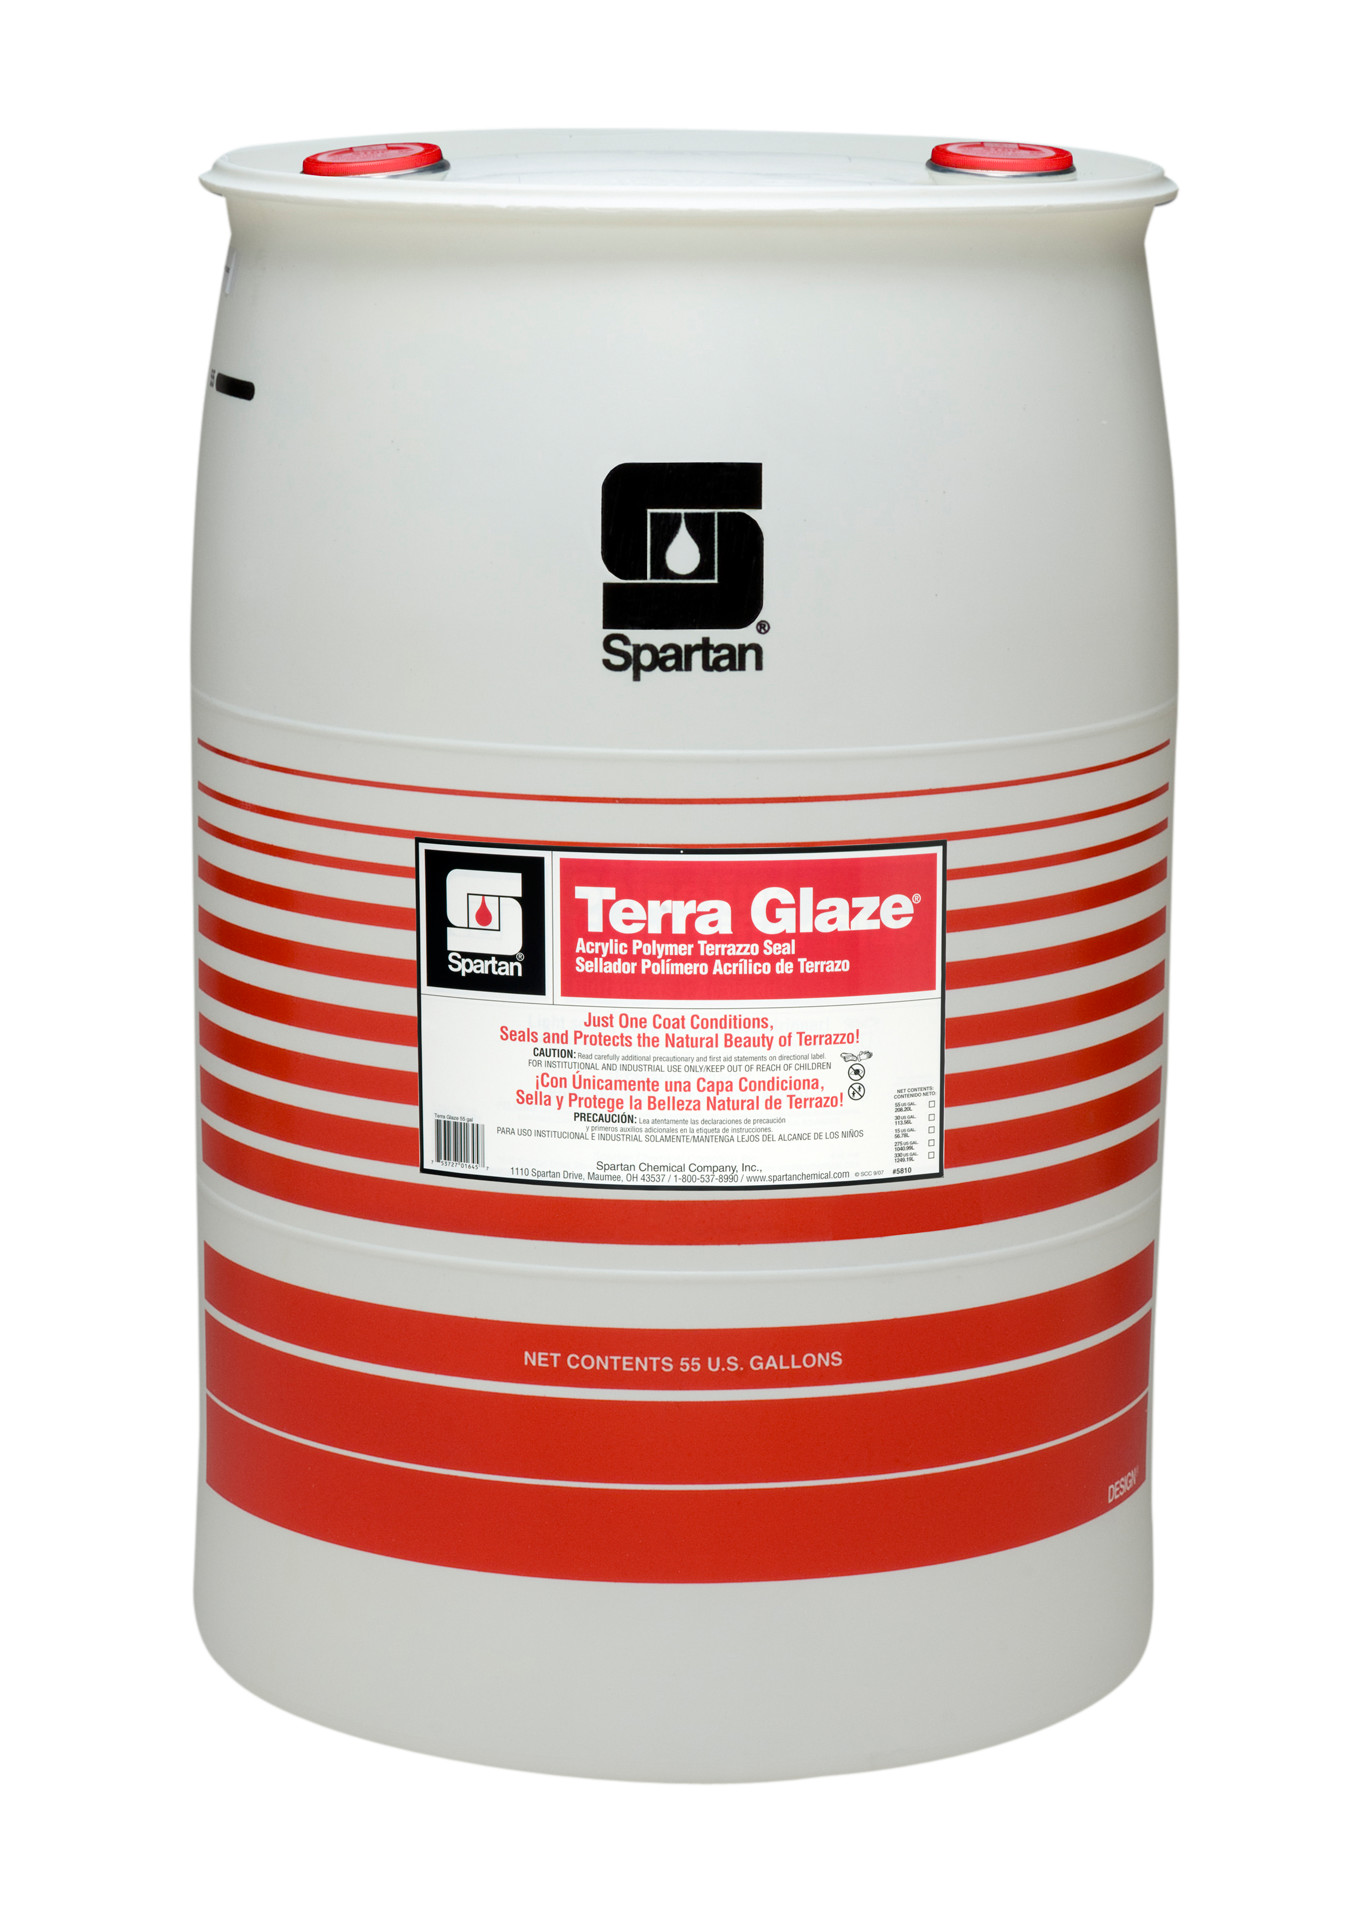 Spartan Chemical Company Terra Glaze, 55 GAL DRUM